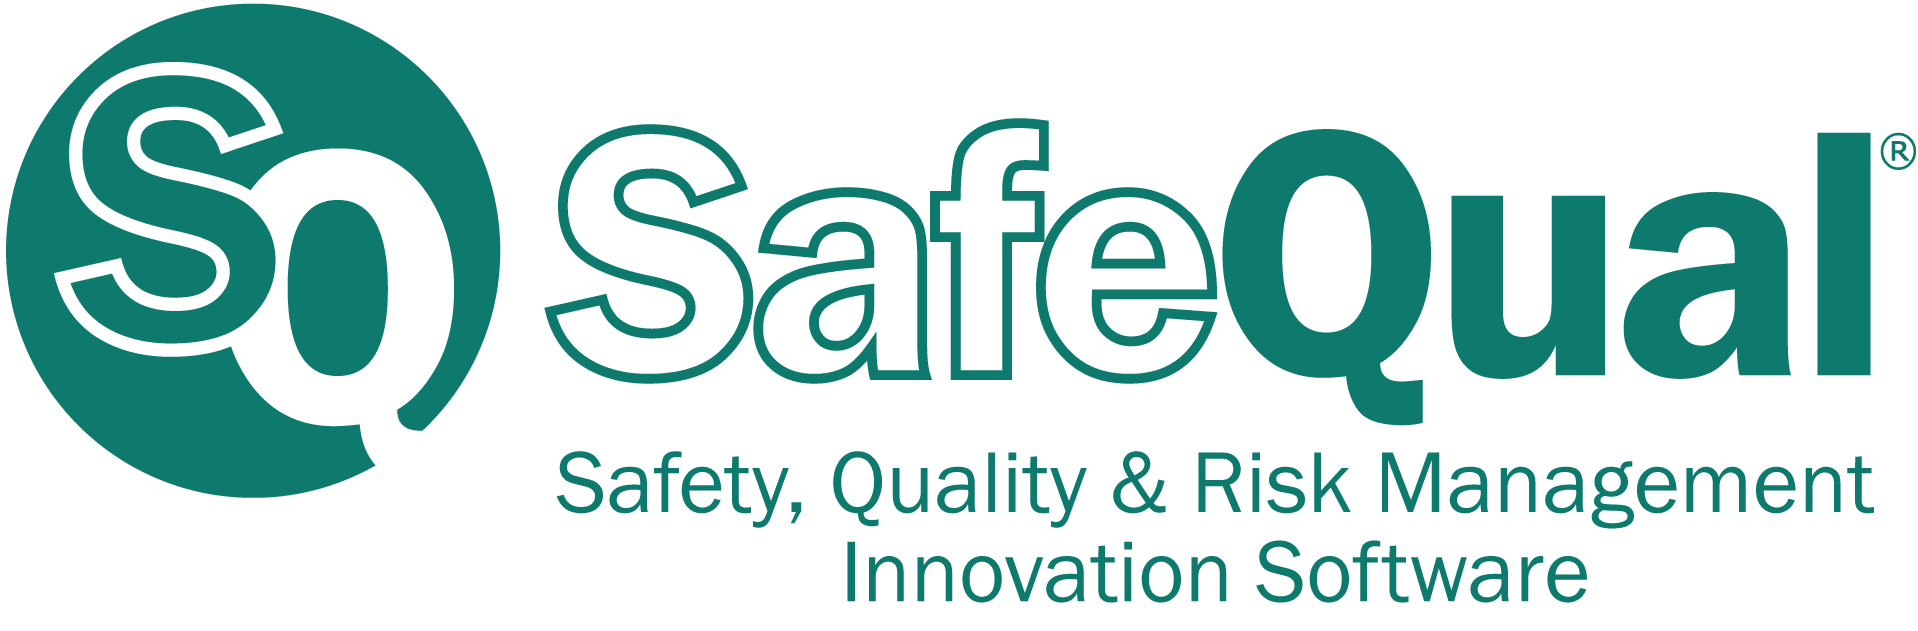 SafeQual_logo_tagline-New